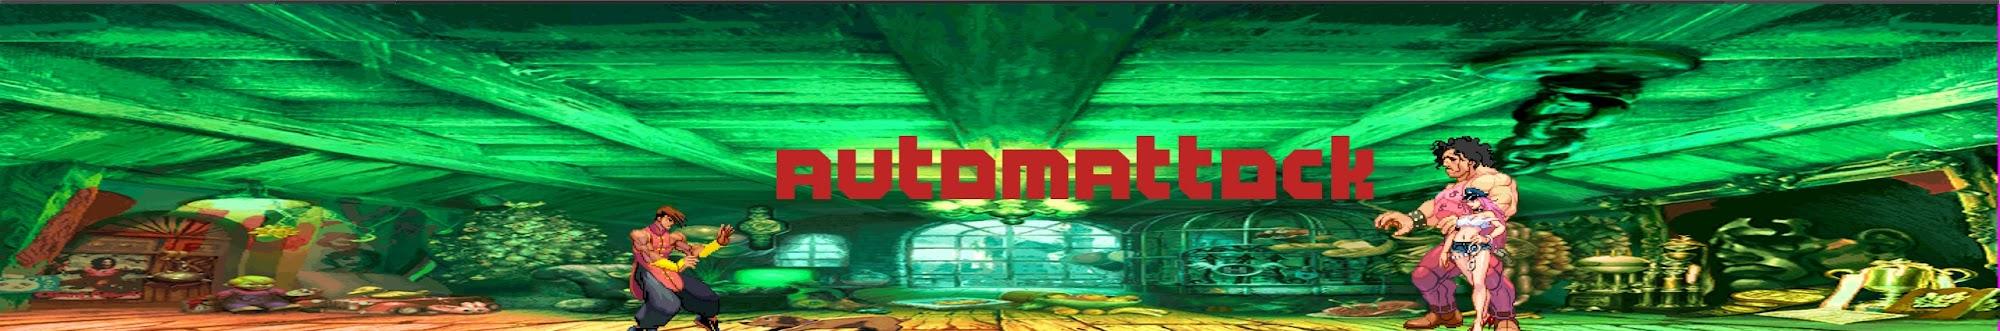 AutoMattock